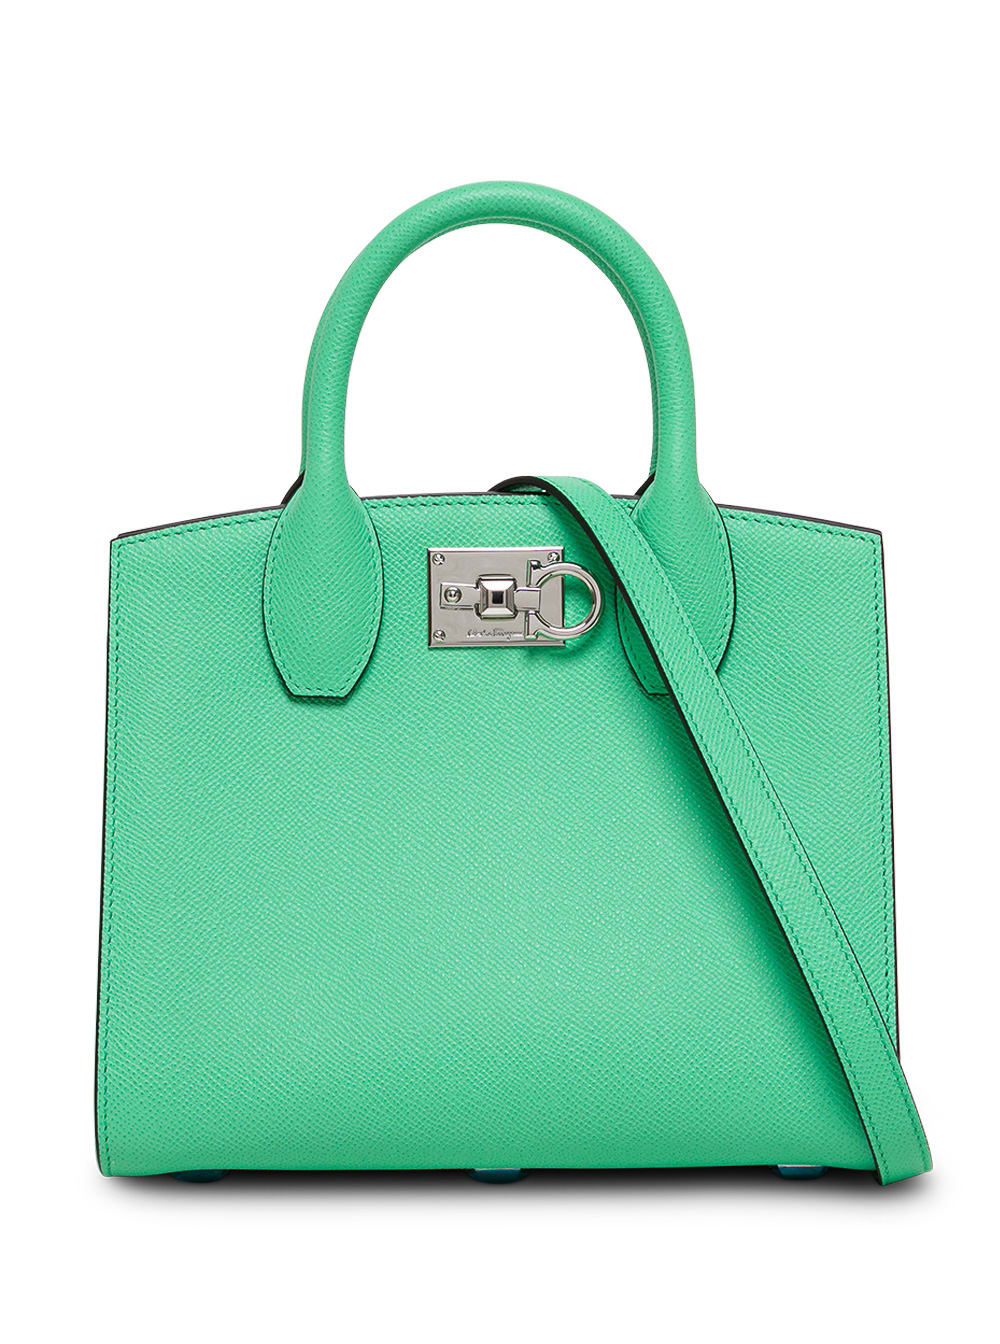 Salvatore Ferragamo Studio Box Green Leather Handbag